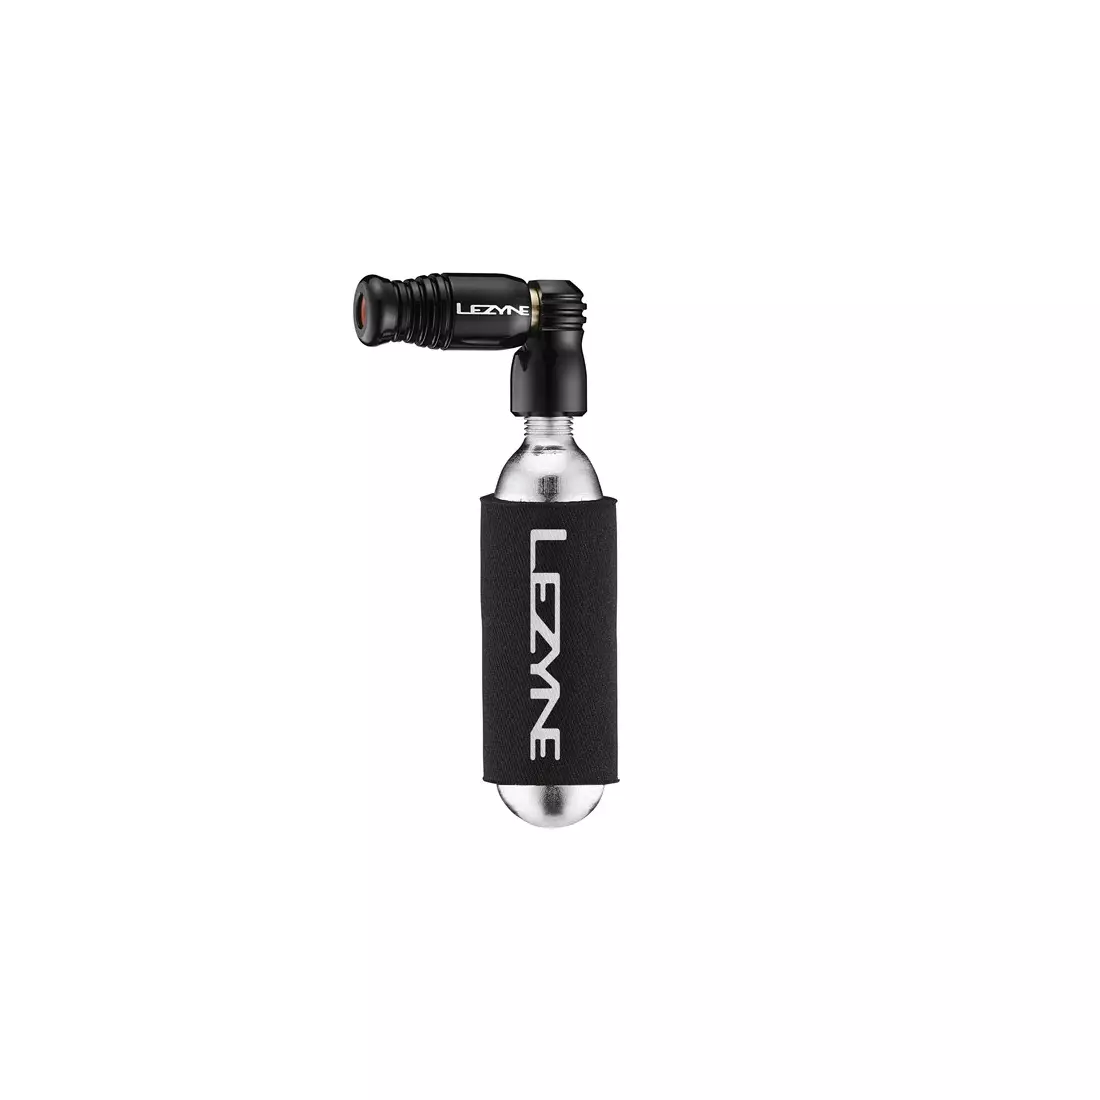 LEZYNE hand bicycle pump trigger speed drive co2 + gas cartridge 16g black LZN-1-C2-TRSDR-V104